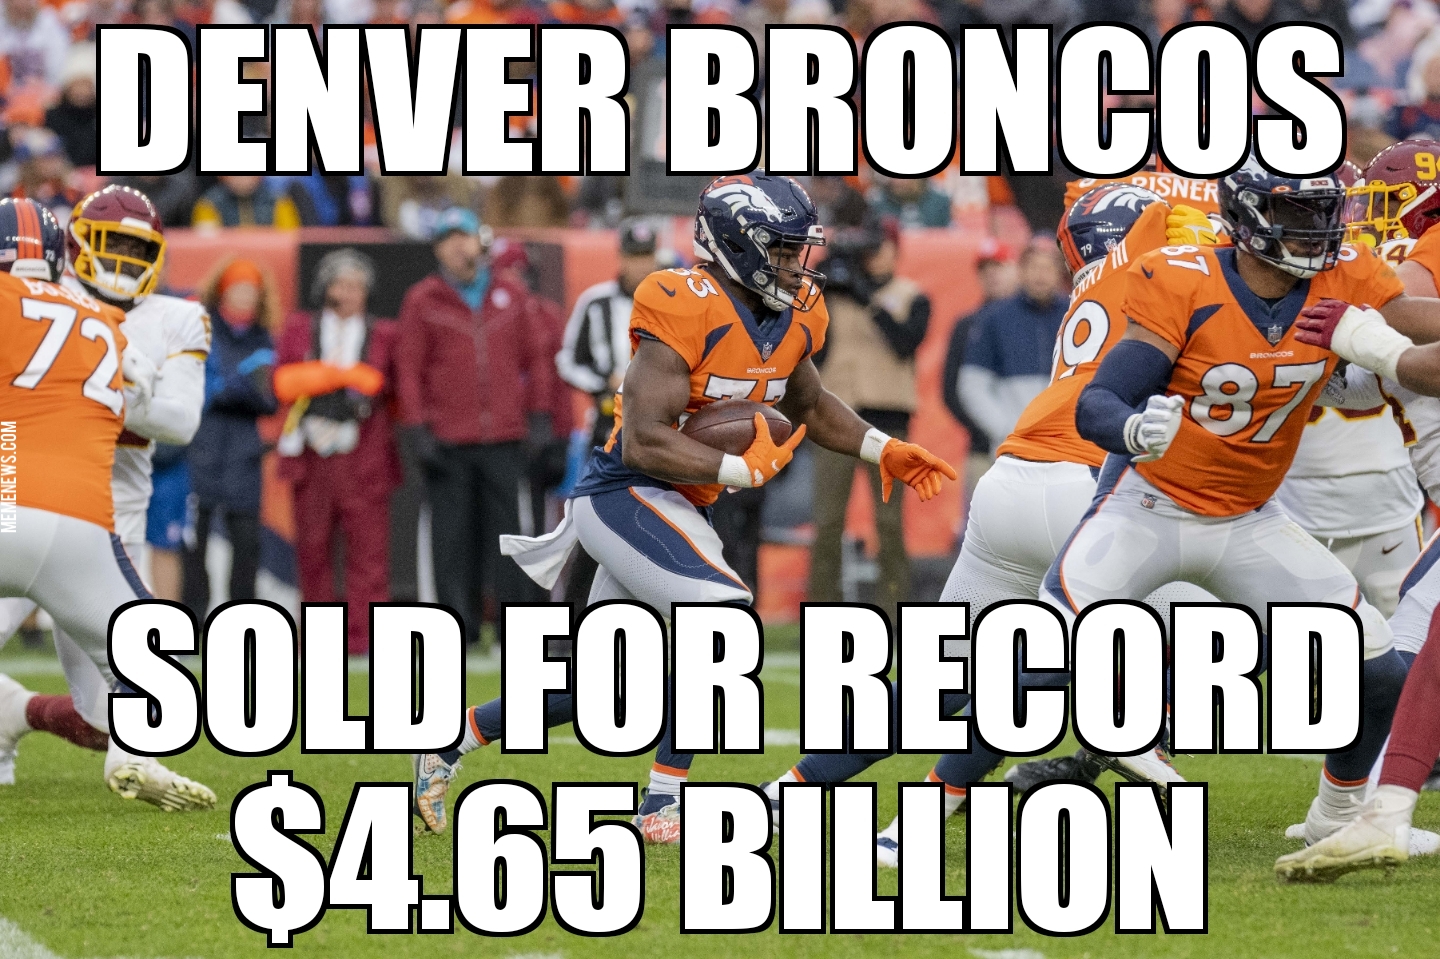 Broncos sold